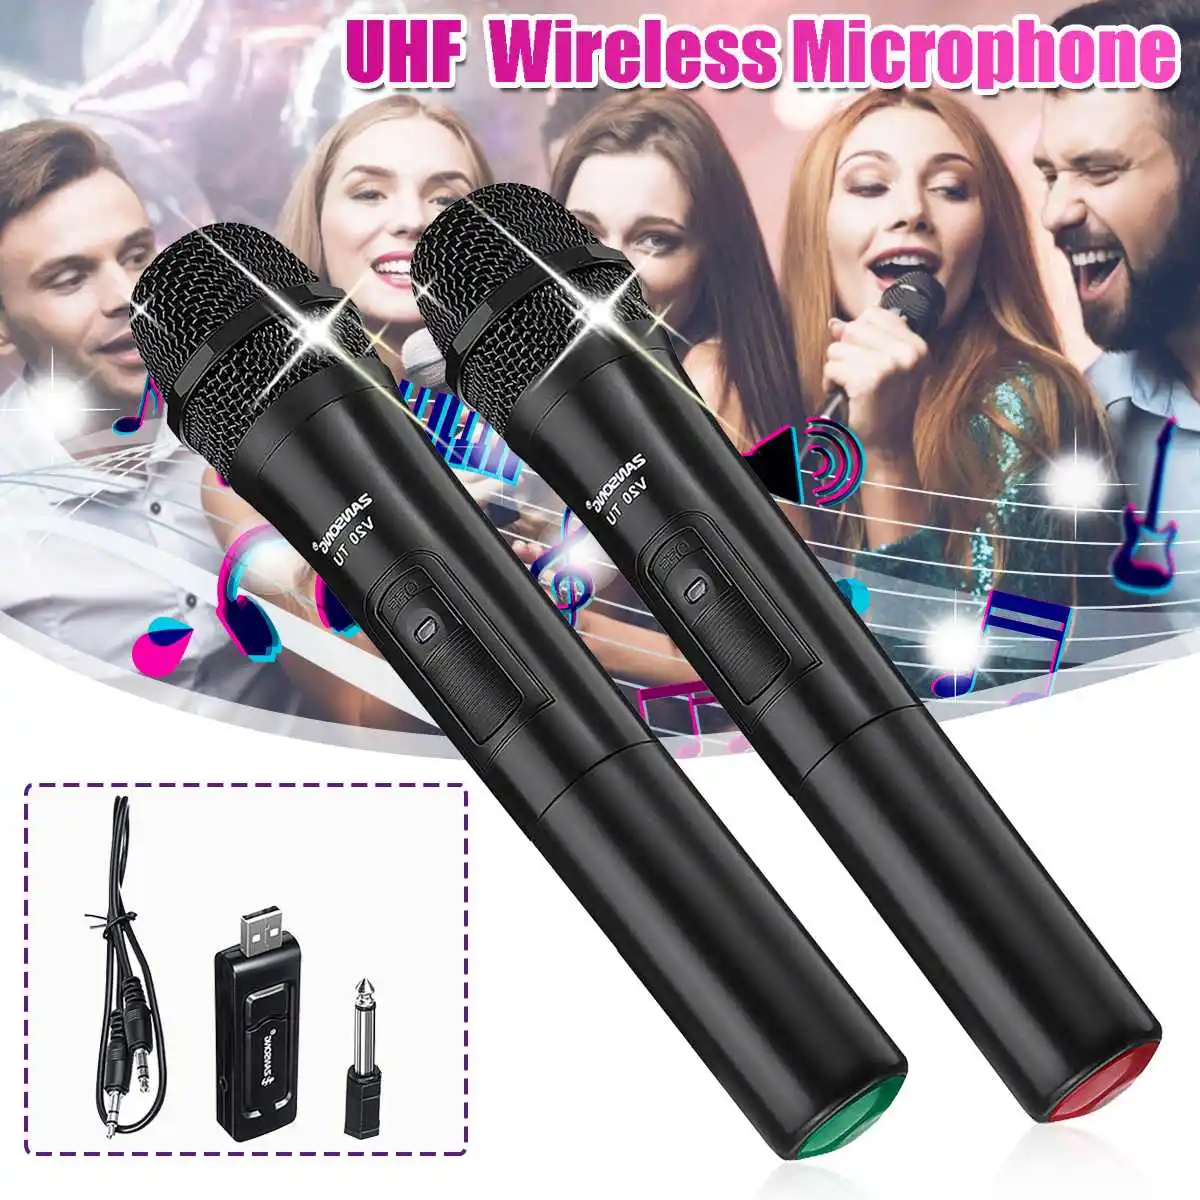 

NEW 2PCS UHF USB 3.5mm 6.35mm Wireless Microphone Megaphone Handheld Mic with Receiver for Karaoke Speech Loudspeaker